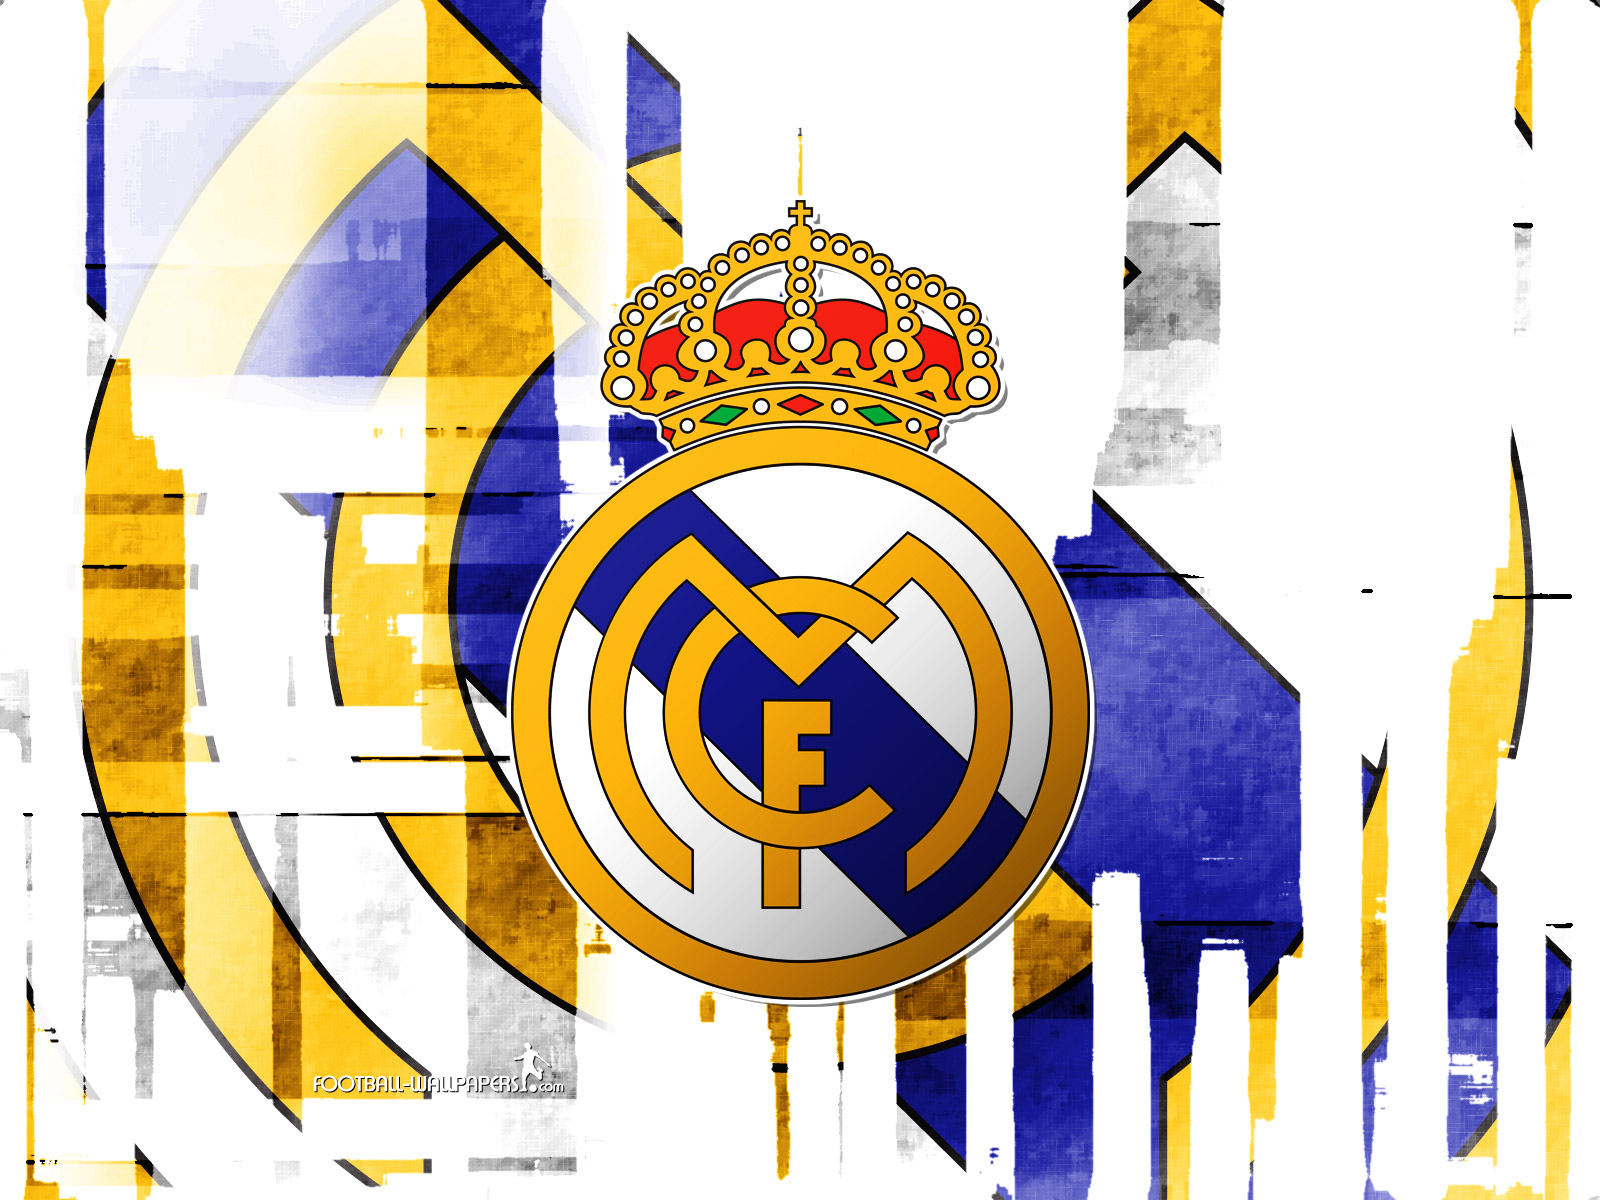 Wallpaper Real Madrid Terkeren